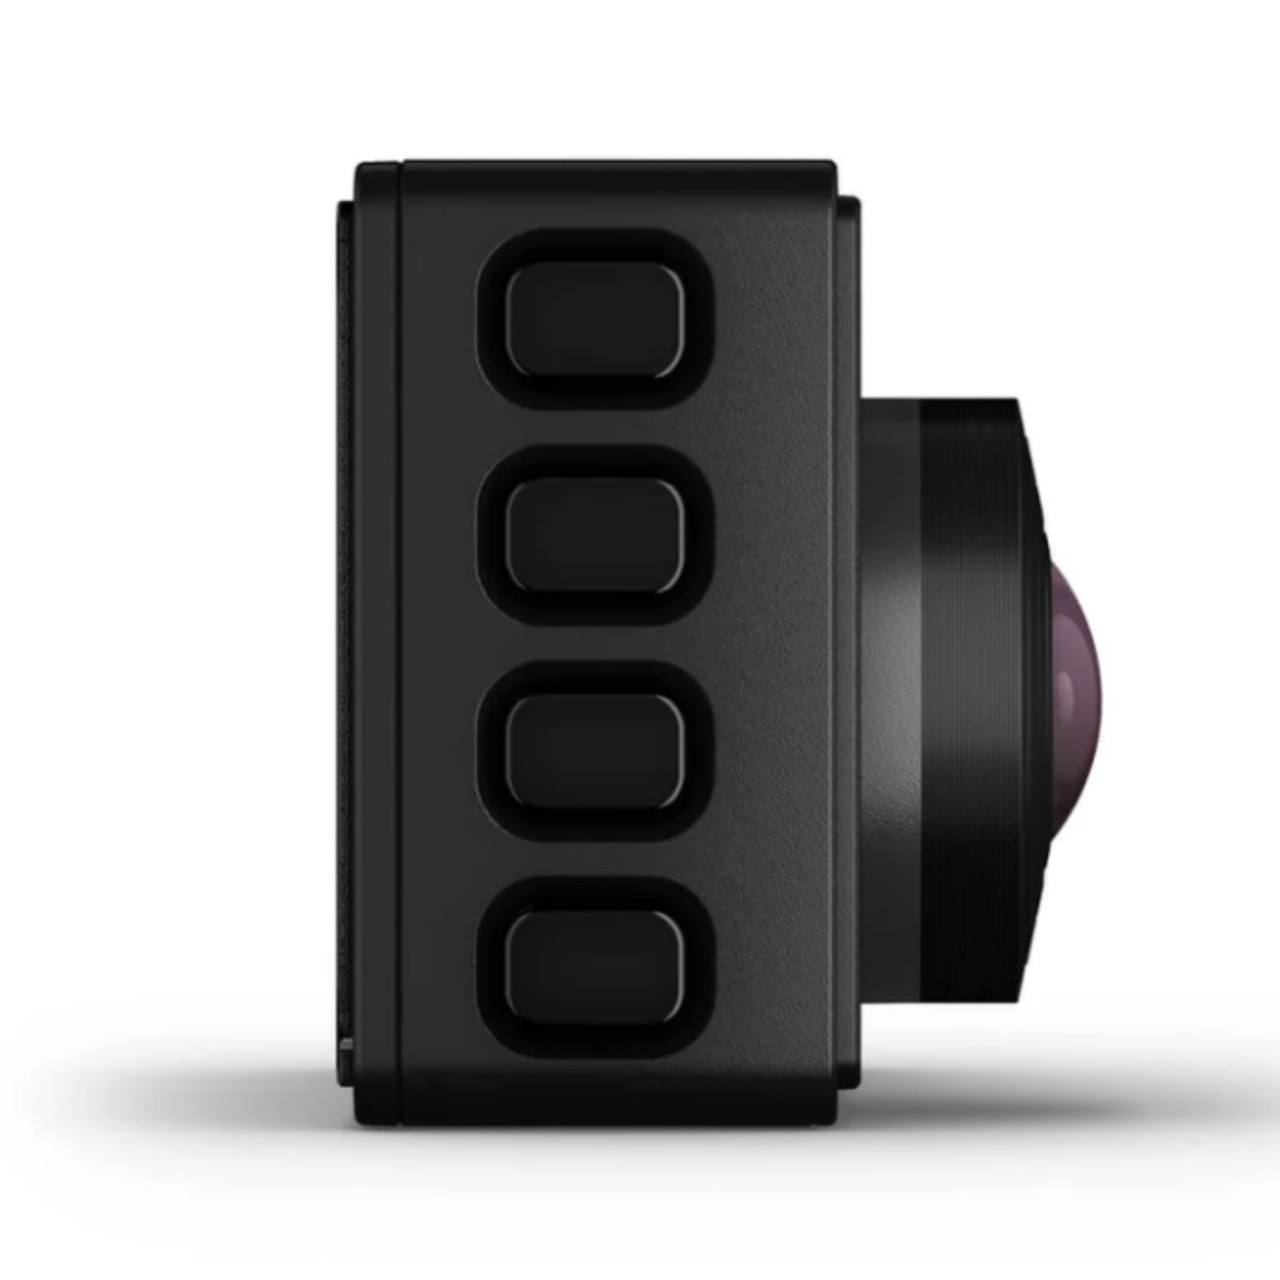 Garmin New OEM Garmin Dash Cam™ 67W 1440p Dash Cam with a 180-degree Field of View, 010-02505-05